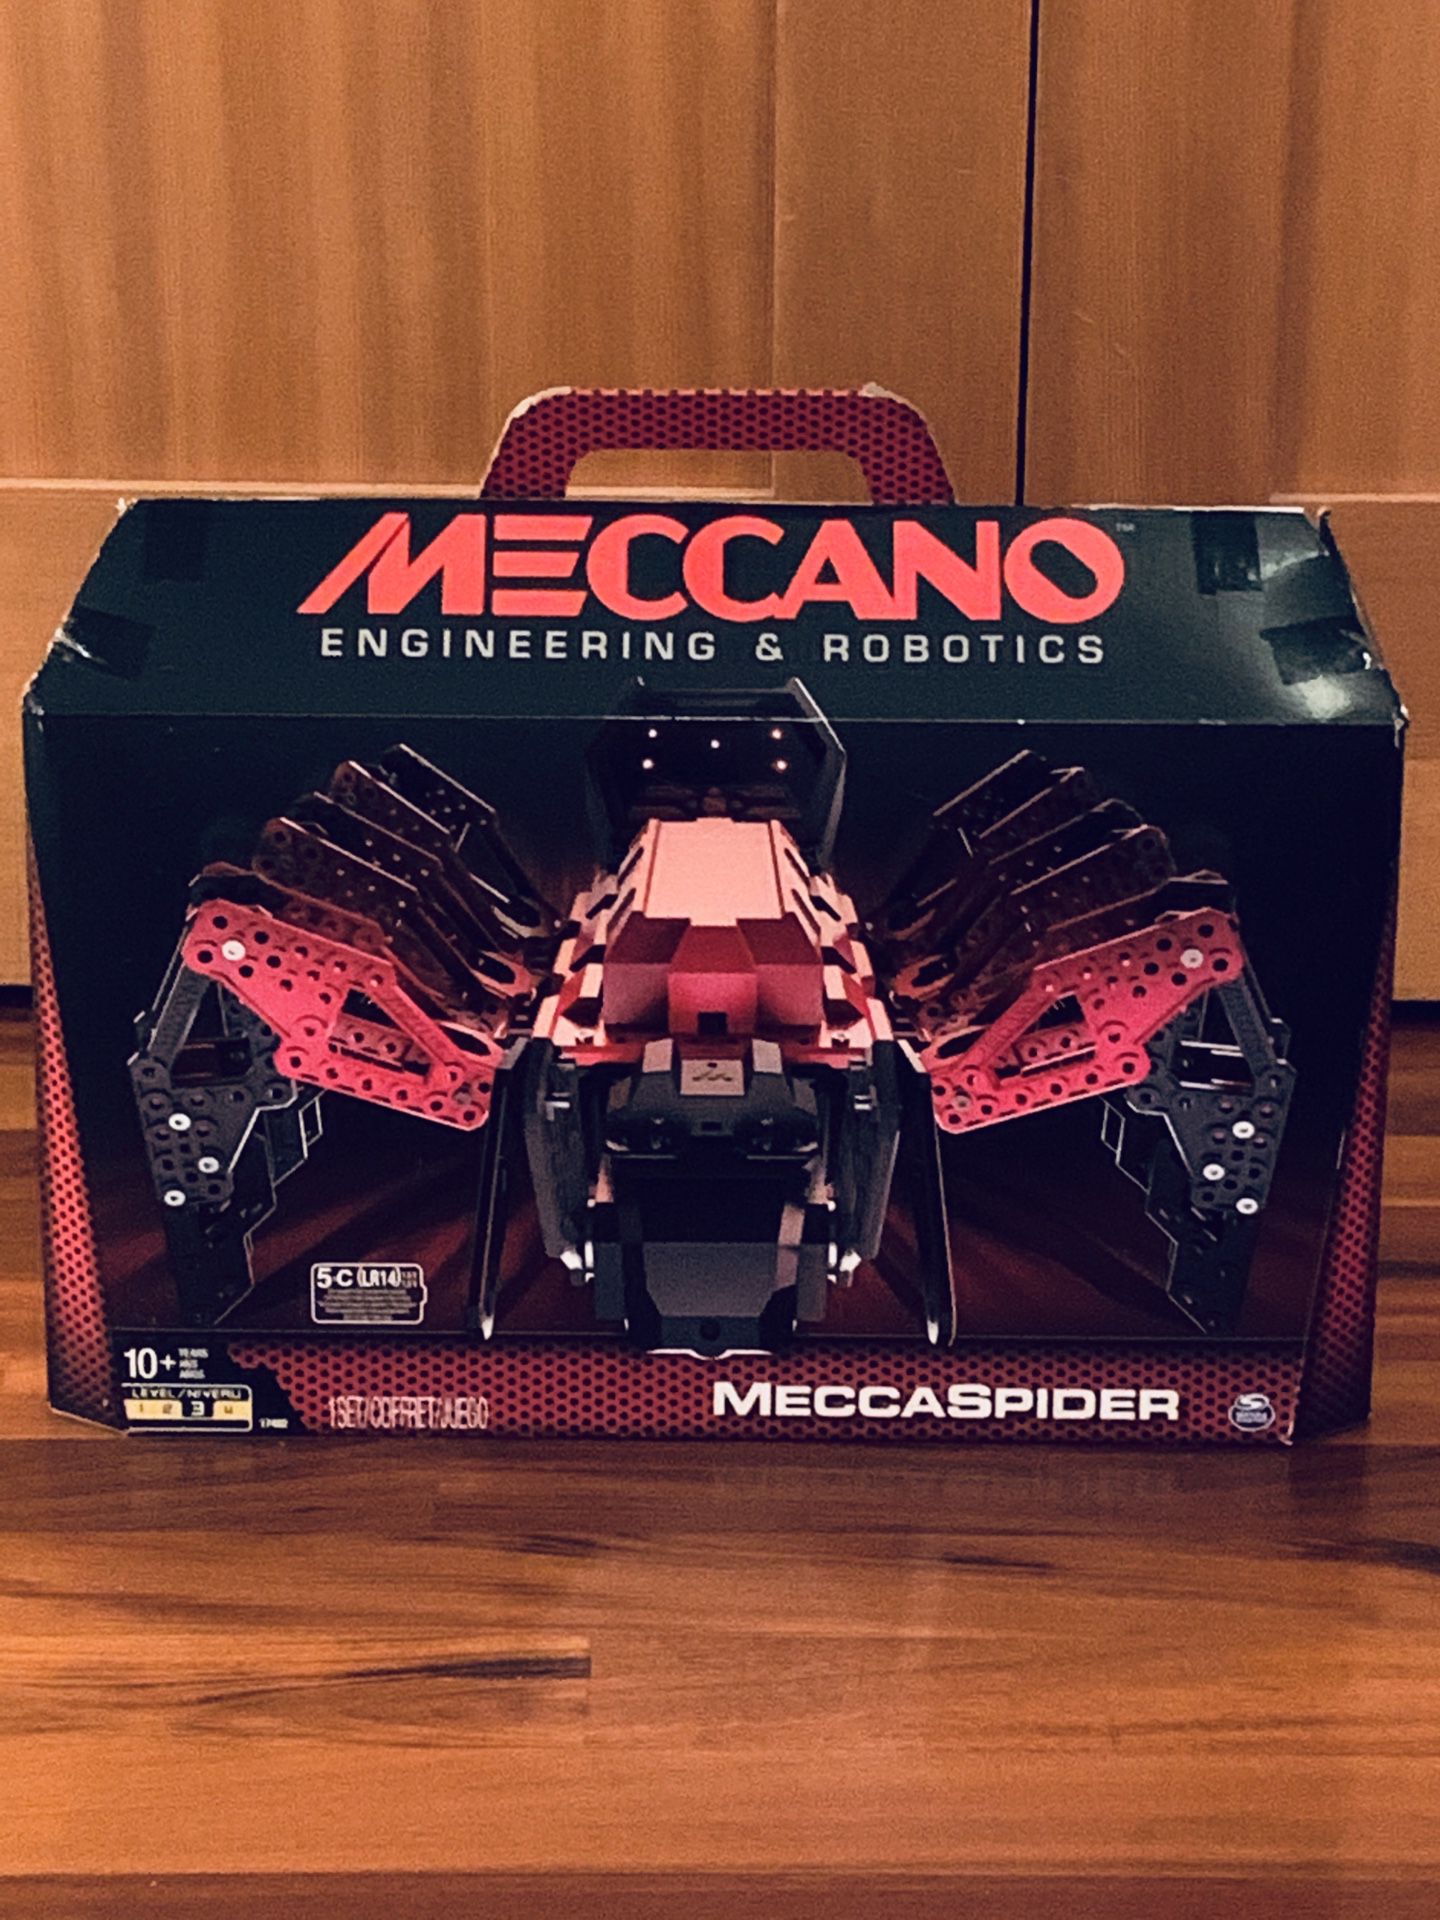 Meccano-Erector | MeccaSpider Robot Kit for Kids to Build | Brand New